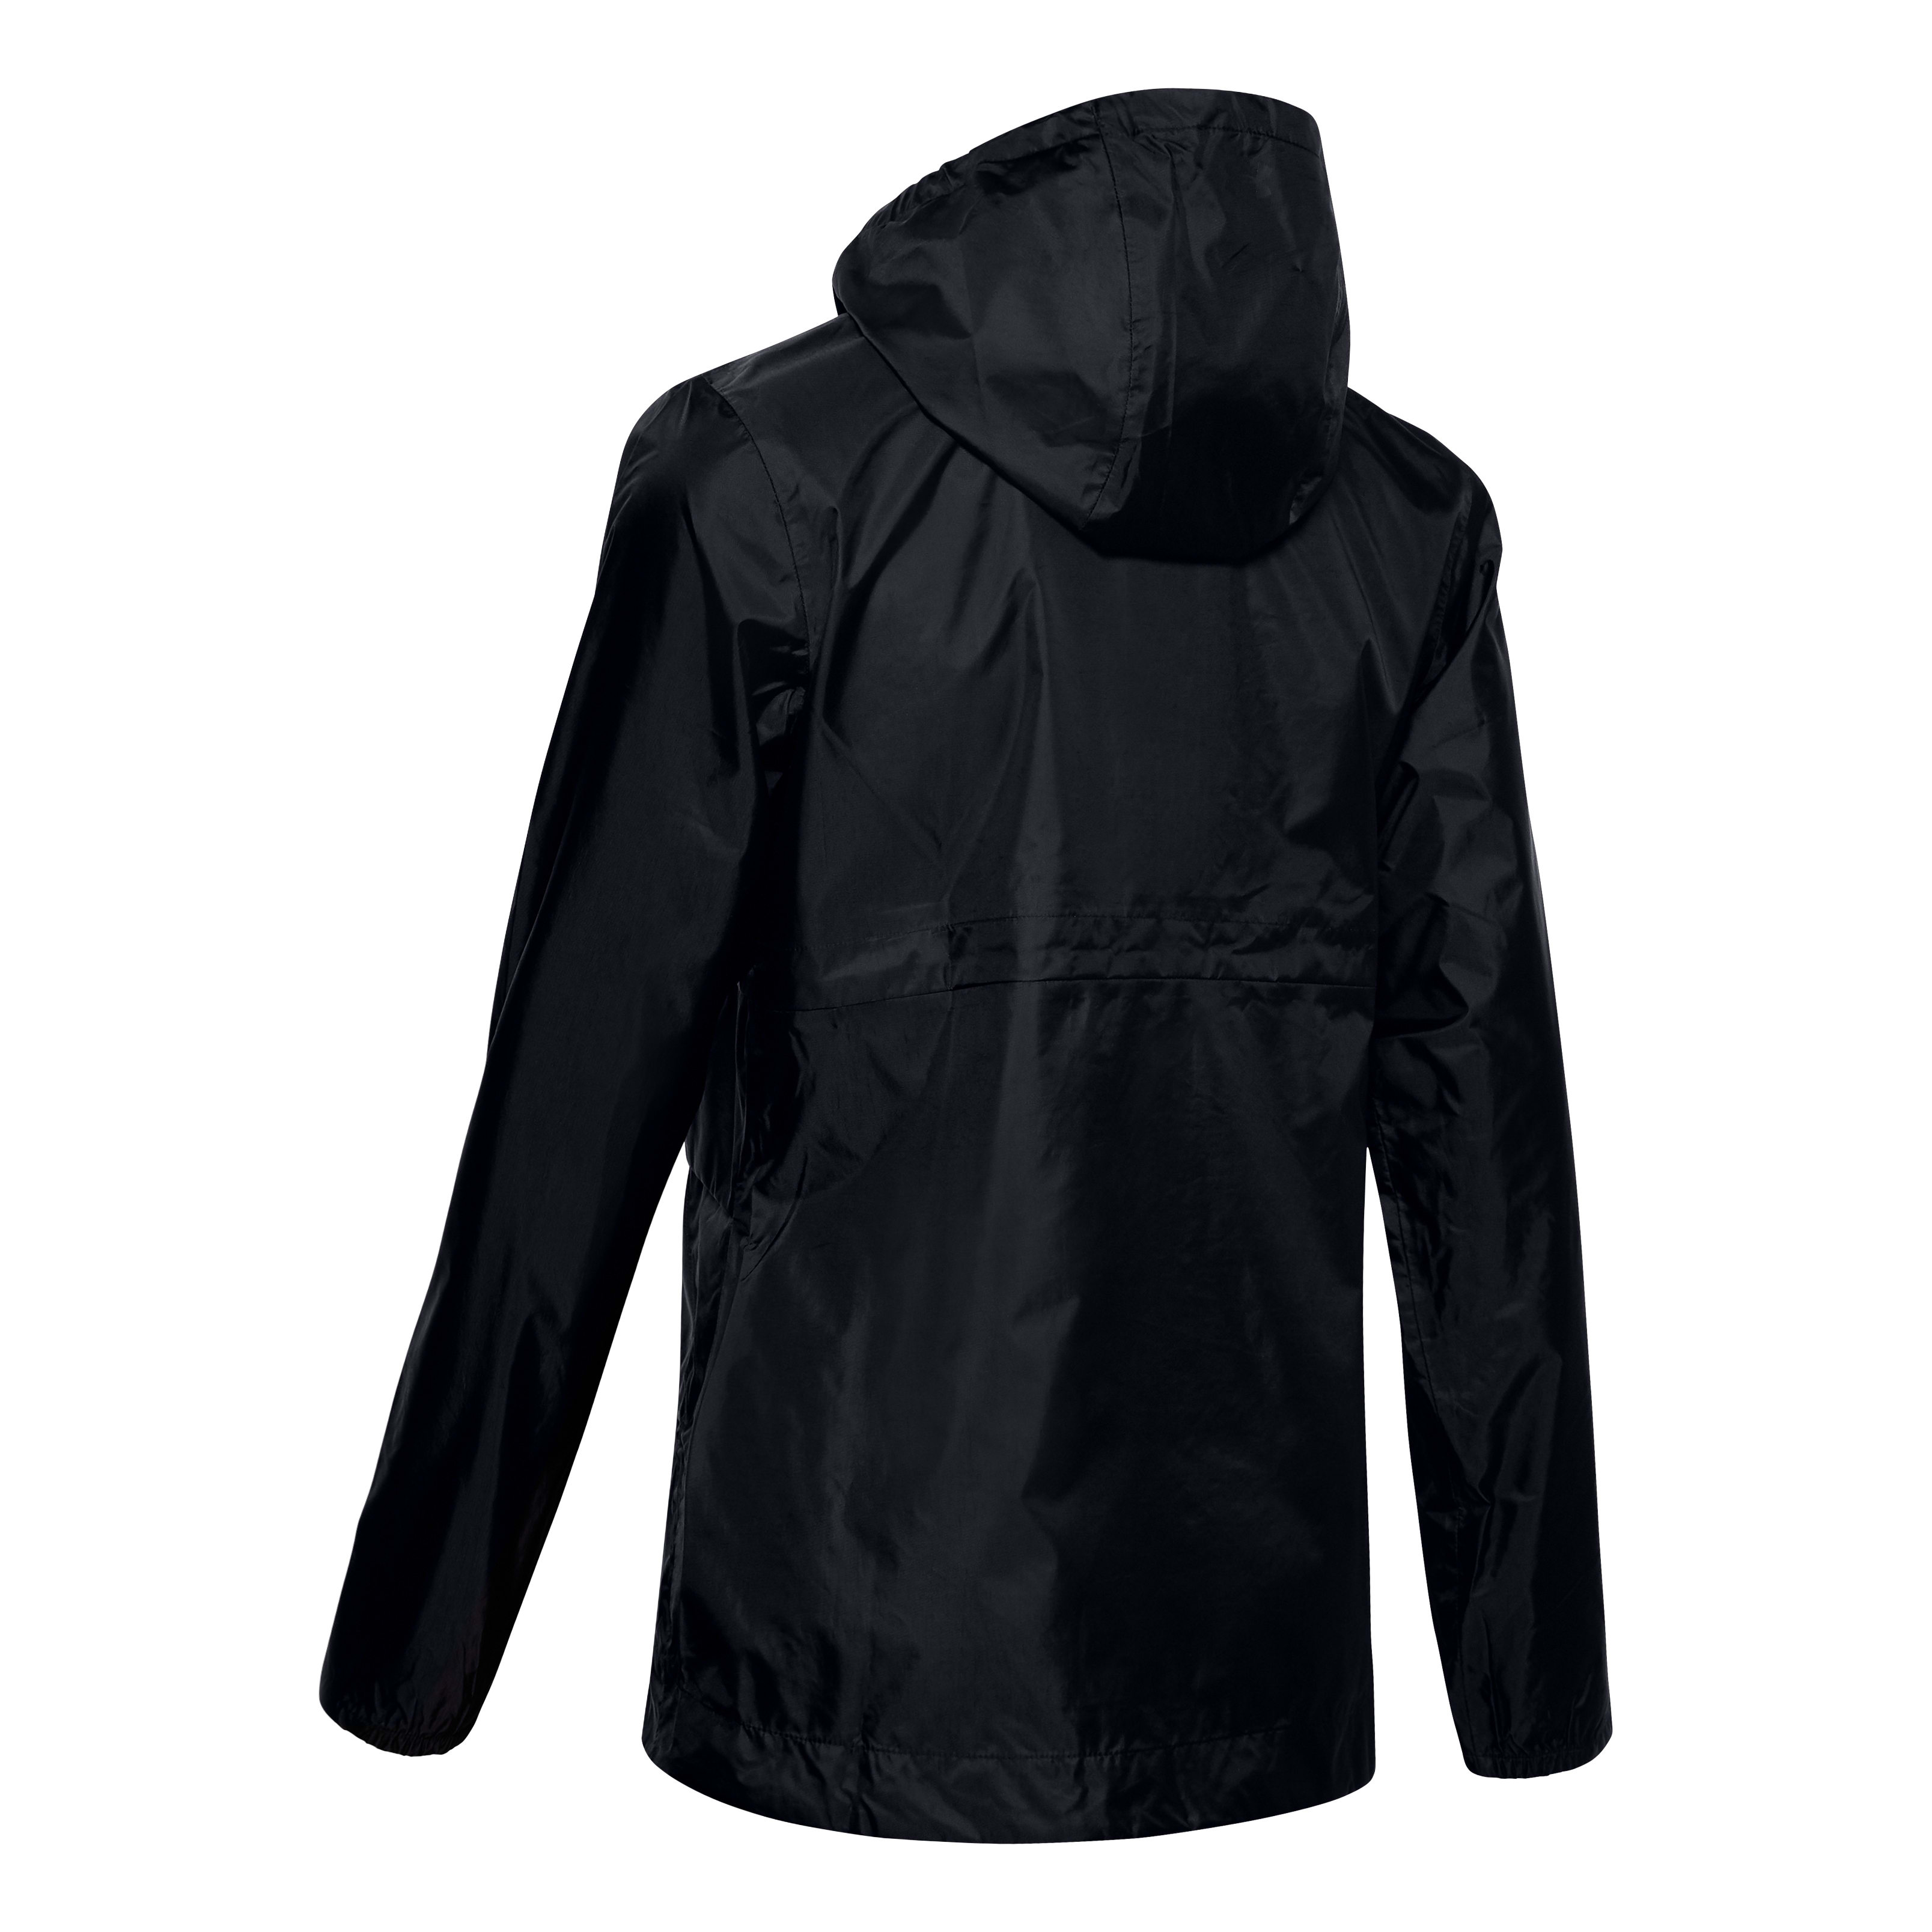 Under Armour® Women’s Cloudburst Shell Jacket - Black - back